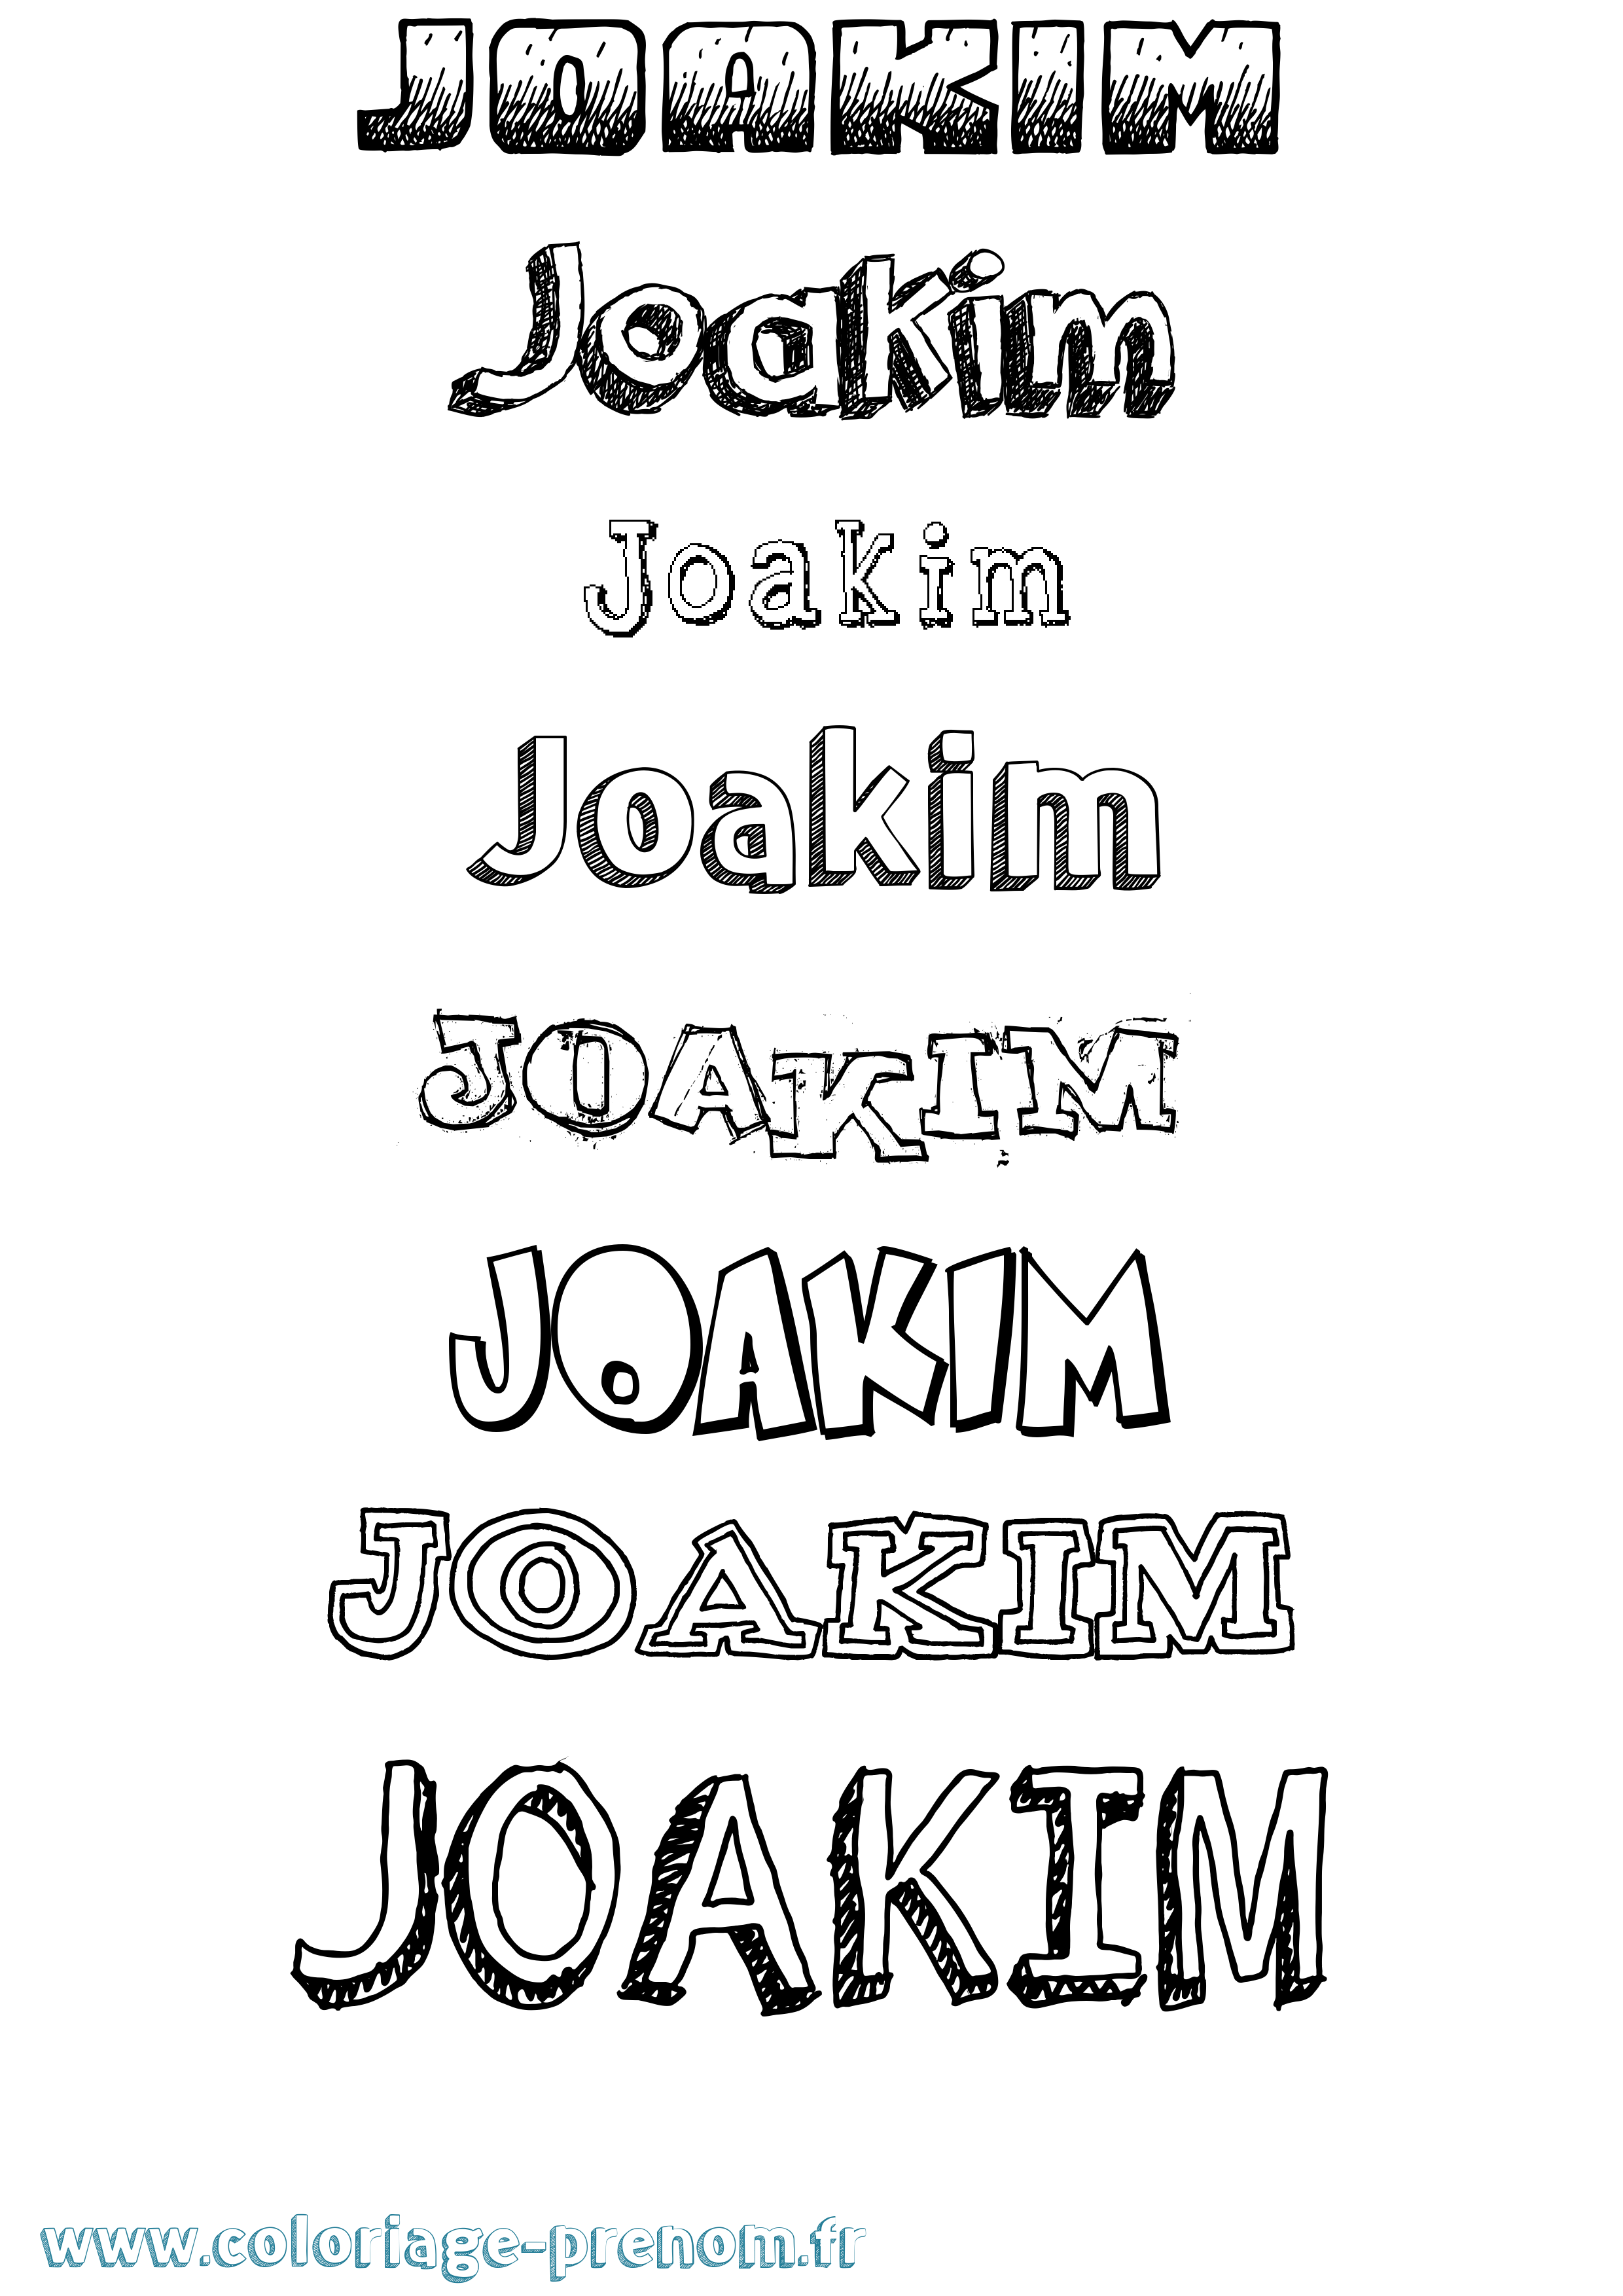 Coloriage prénom Joakim